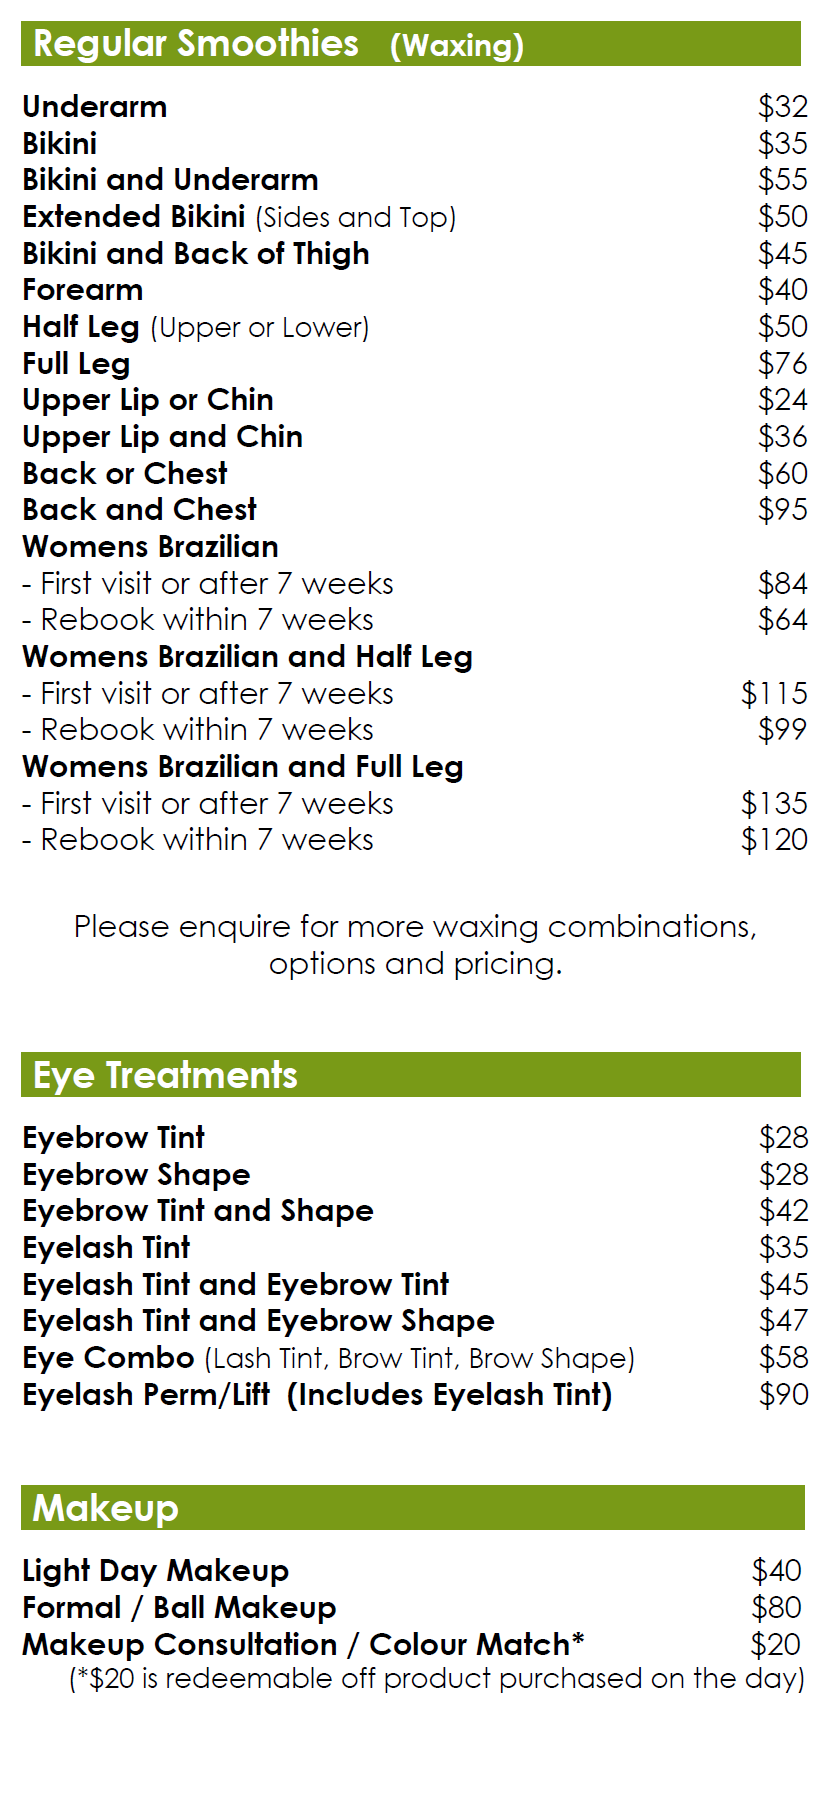 Body Cafe menu - waxing, eye treatments, dermaplaning, makeup